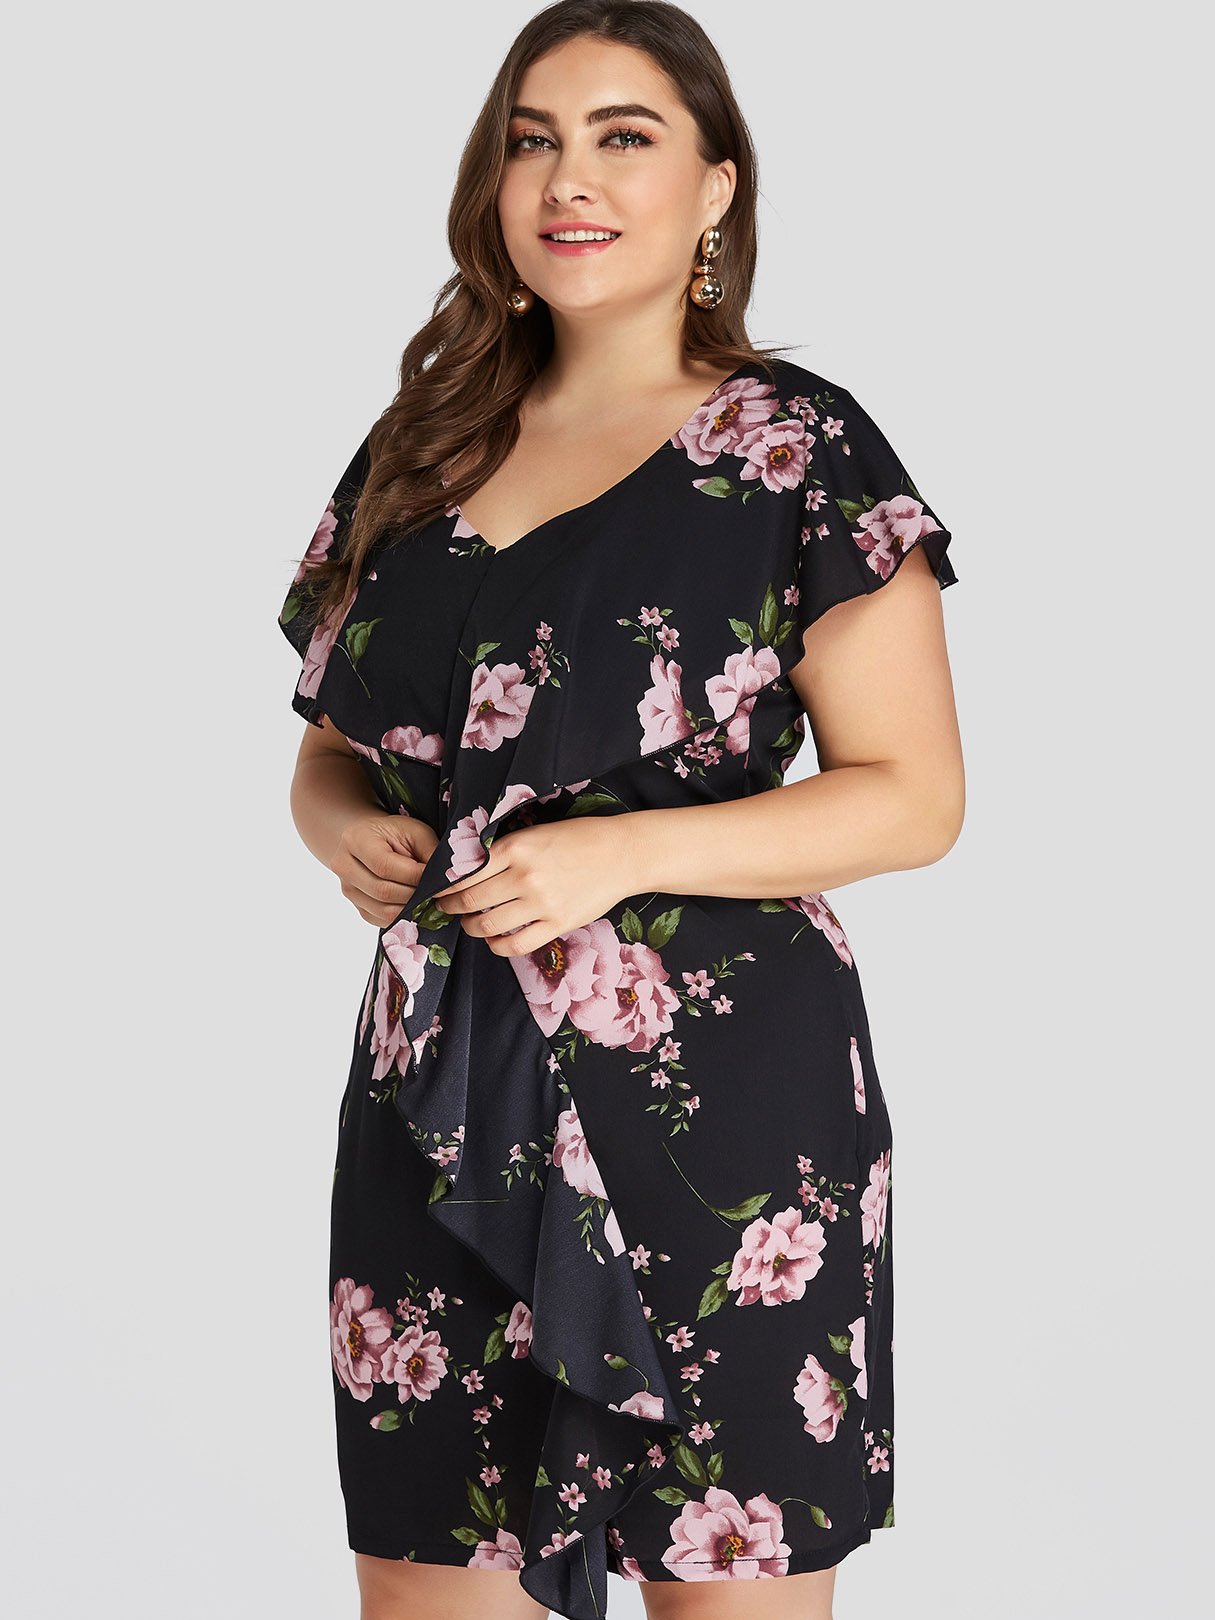 Wholesale V-Neck Floral Print Ruffle Trim Short Sleeve Black Plus Size Dress